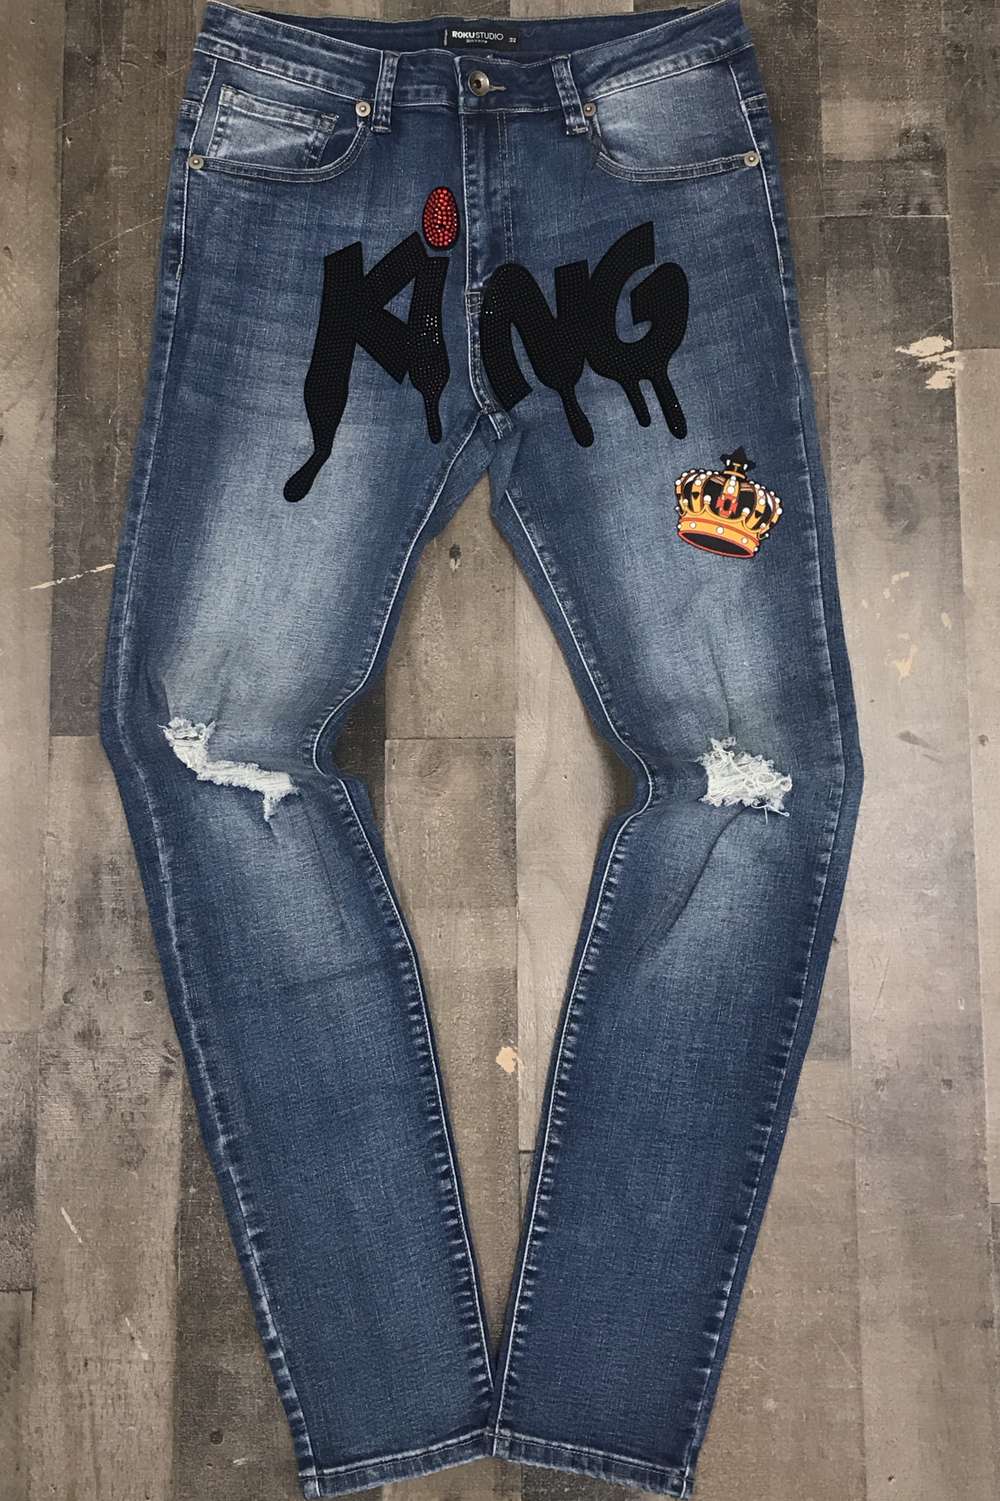 Roku Studio- king jeans (blue)